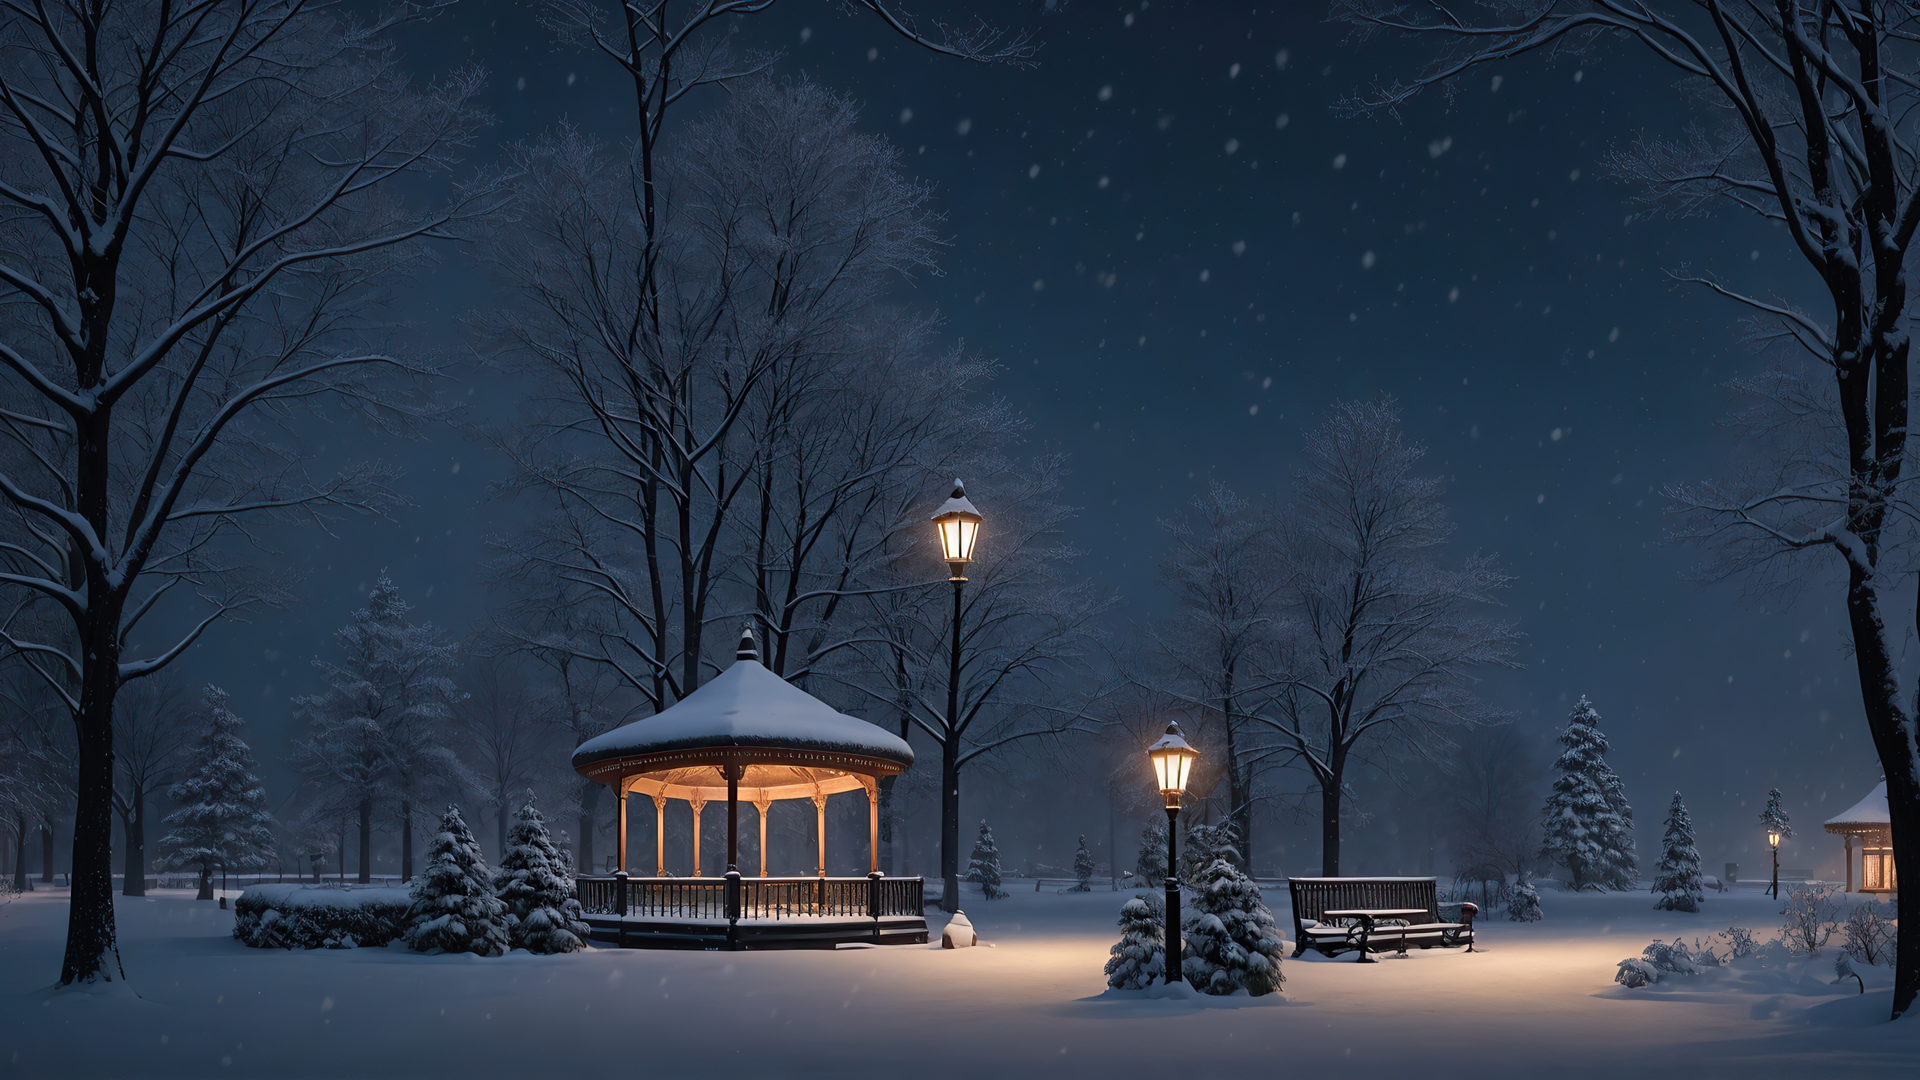 General 1920x1080 winter park snow trees dark AI art sky night landscape digital art snow covered bench lights